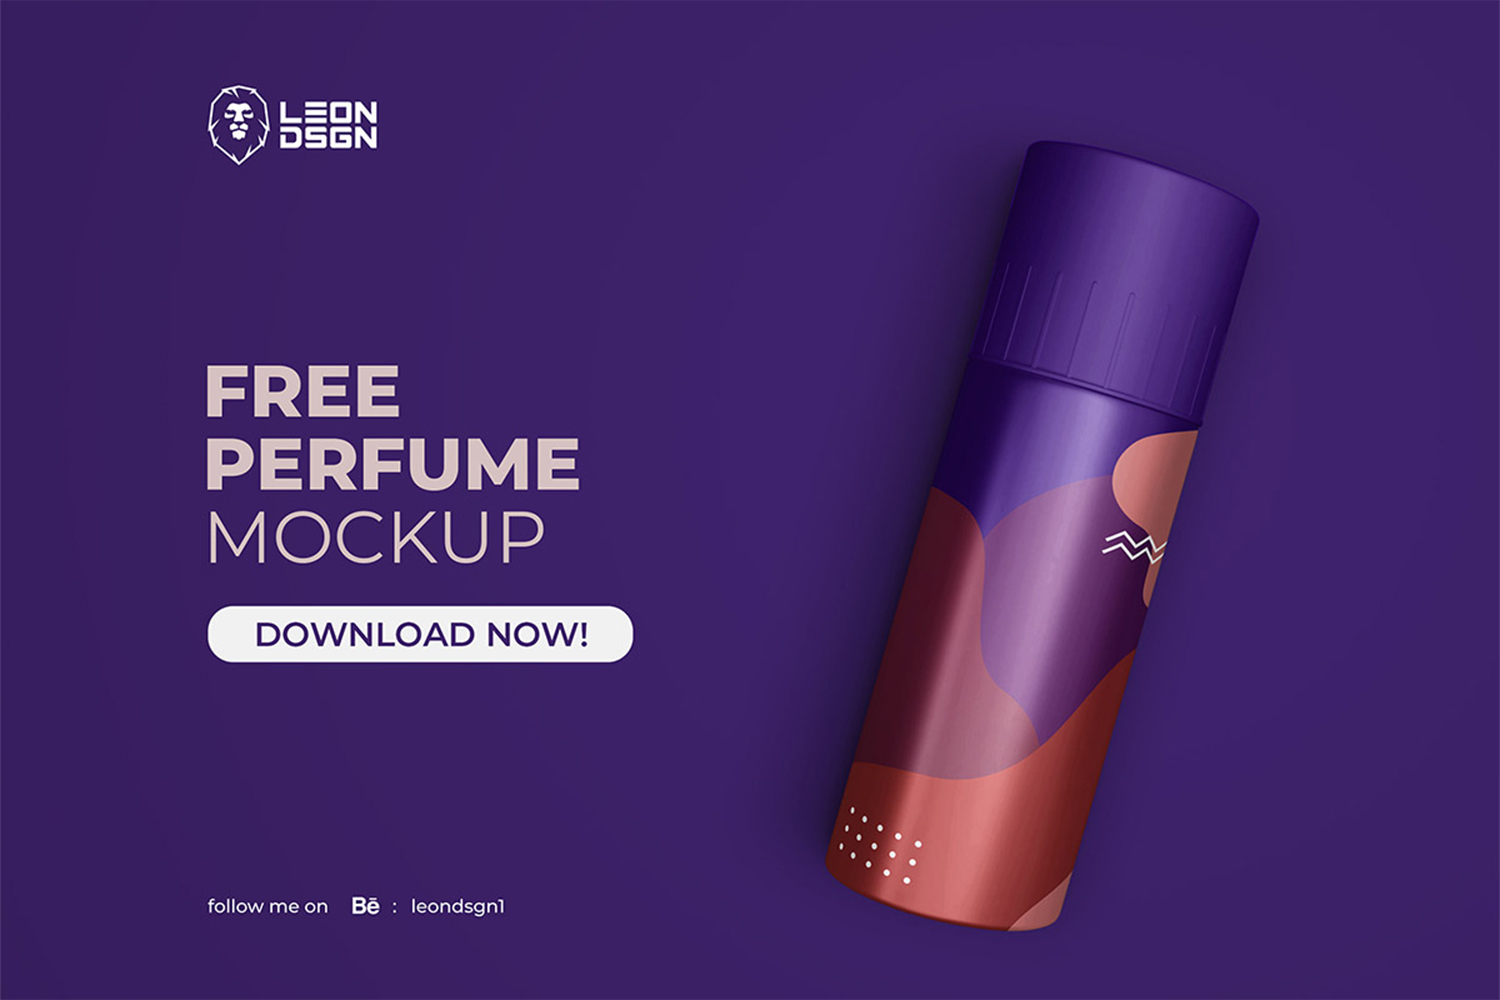 Perfume Mockup Free Download